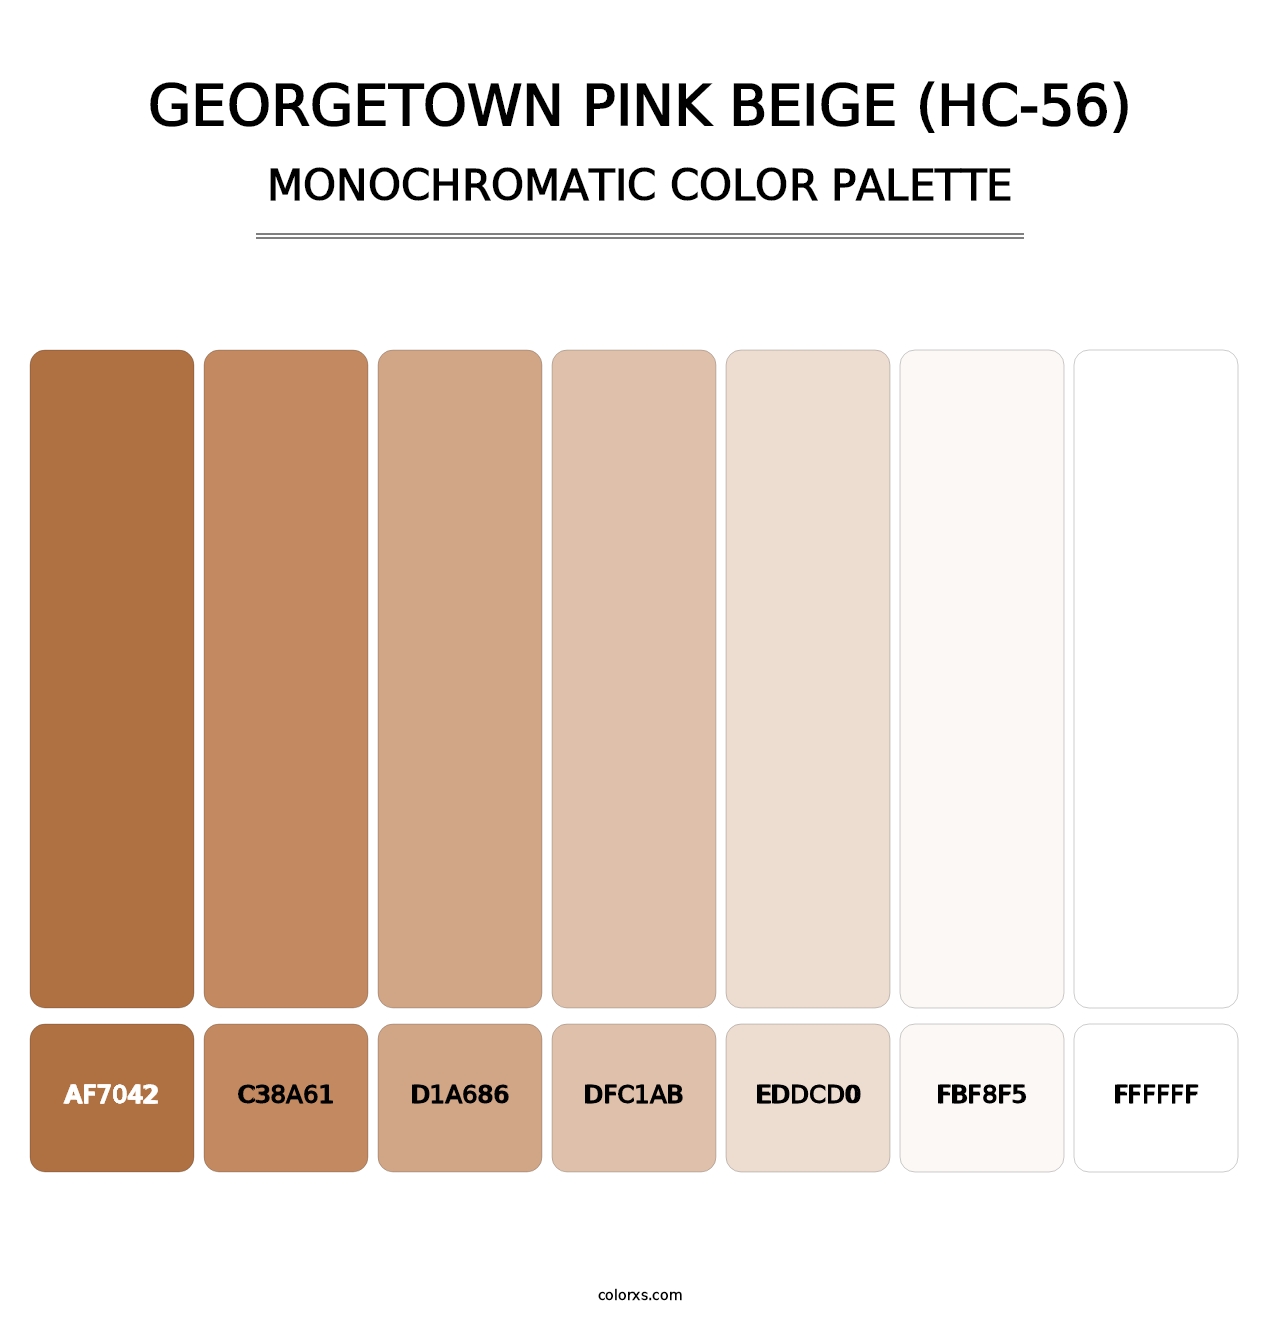 Georgetown Pink Beige (HC-56) - Monochromatic Color Palette